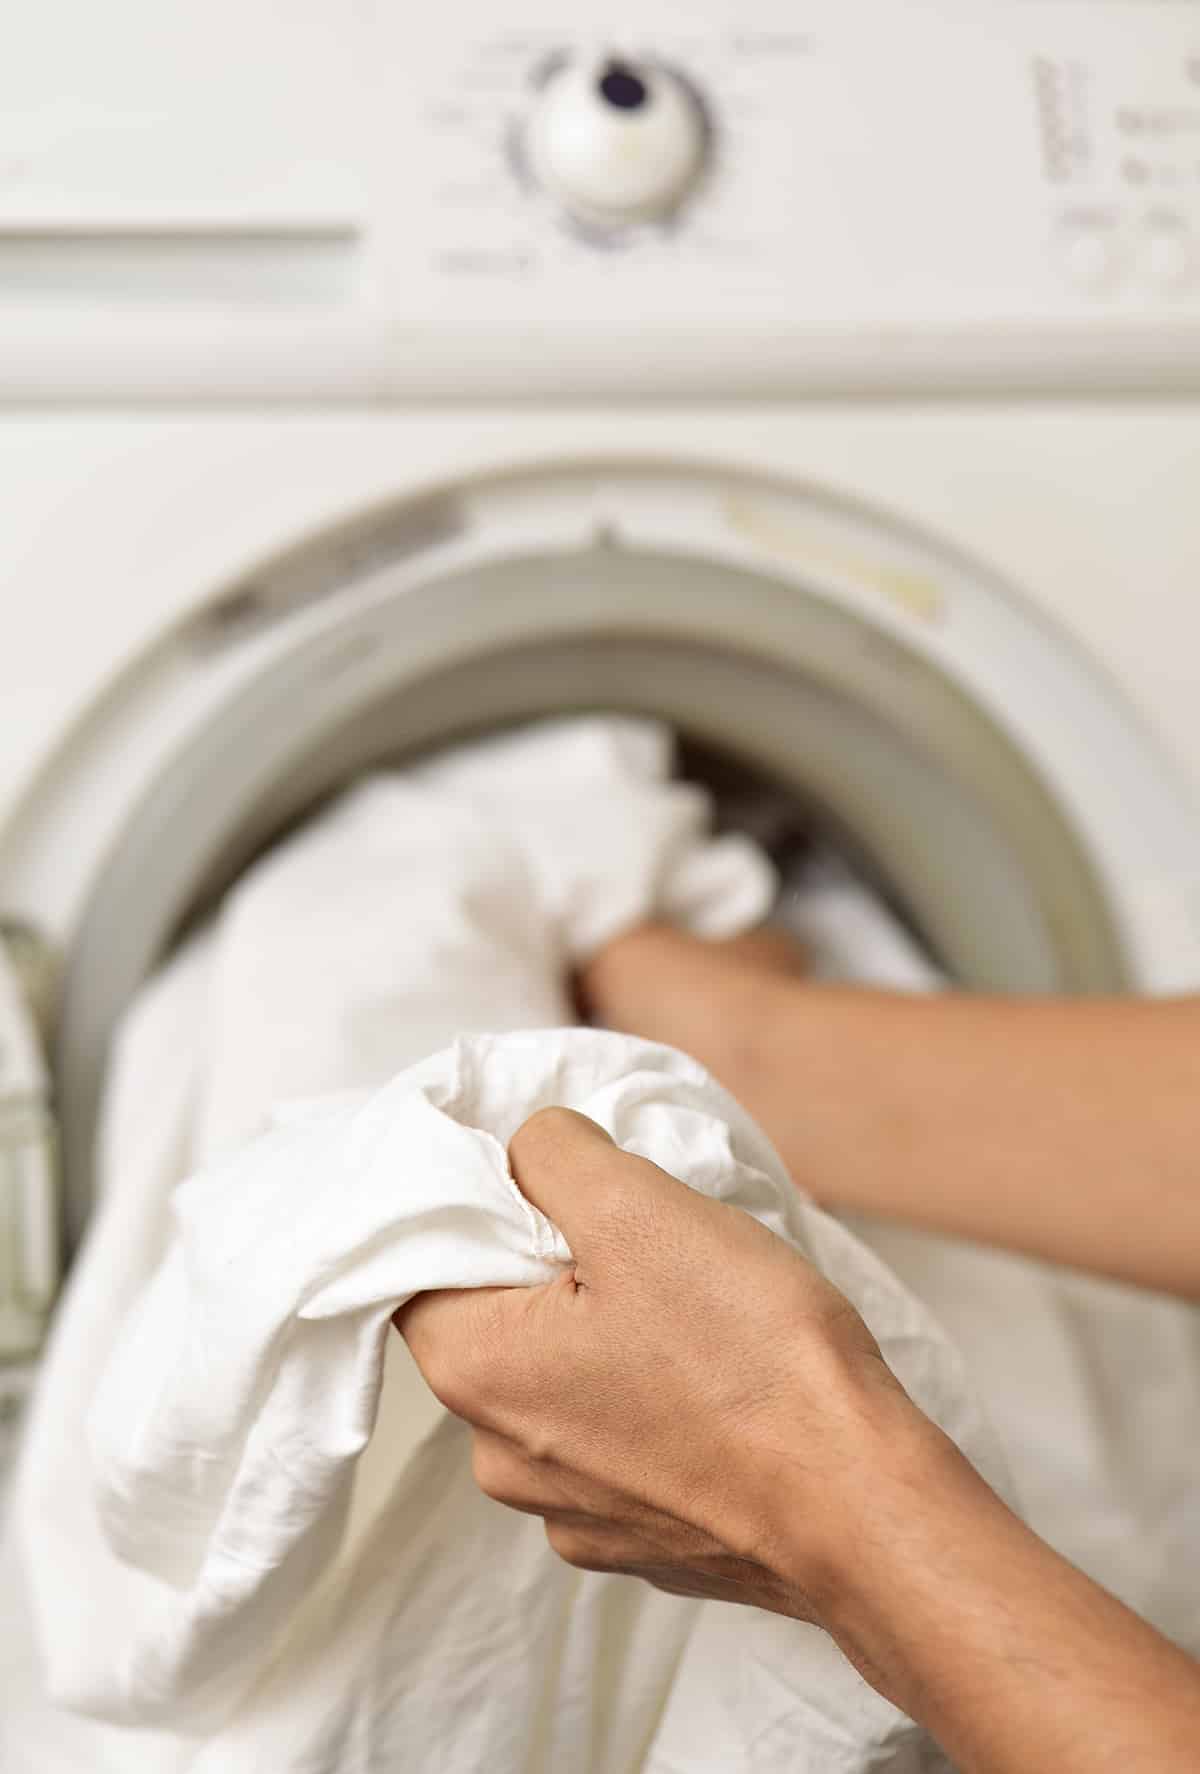 Hands putting sheets into a washing machine.